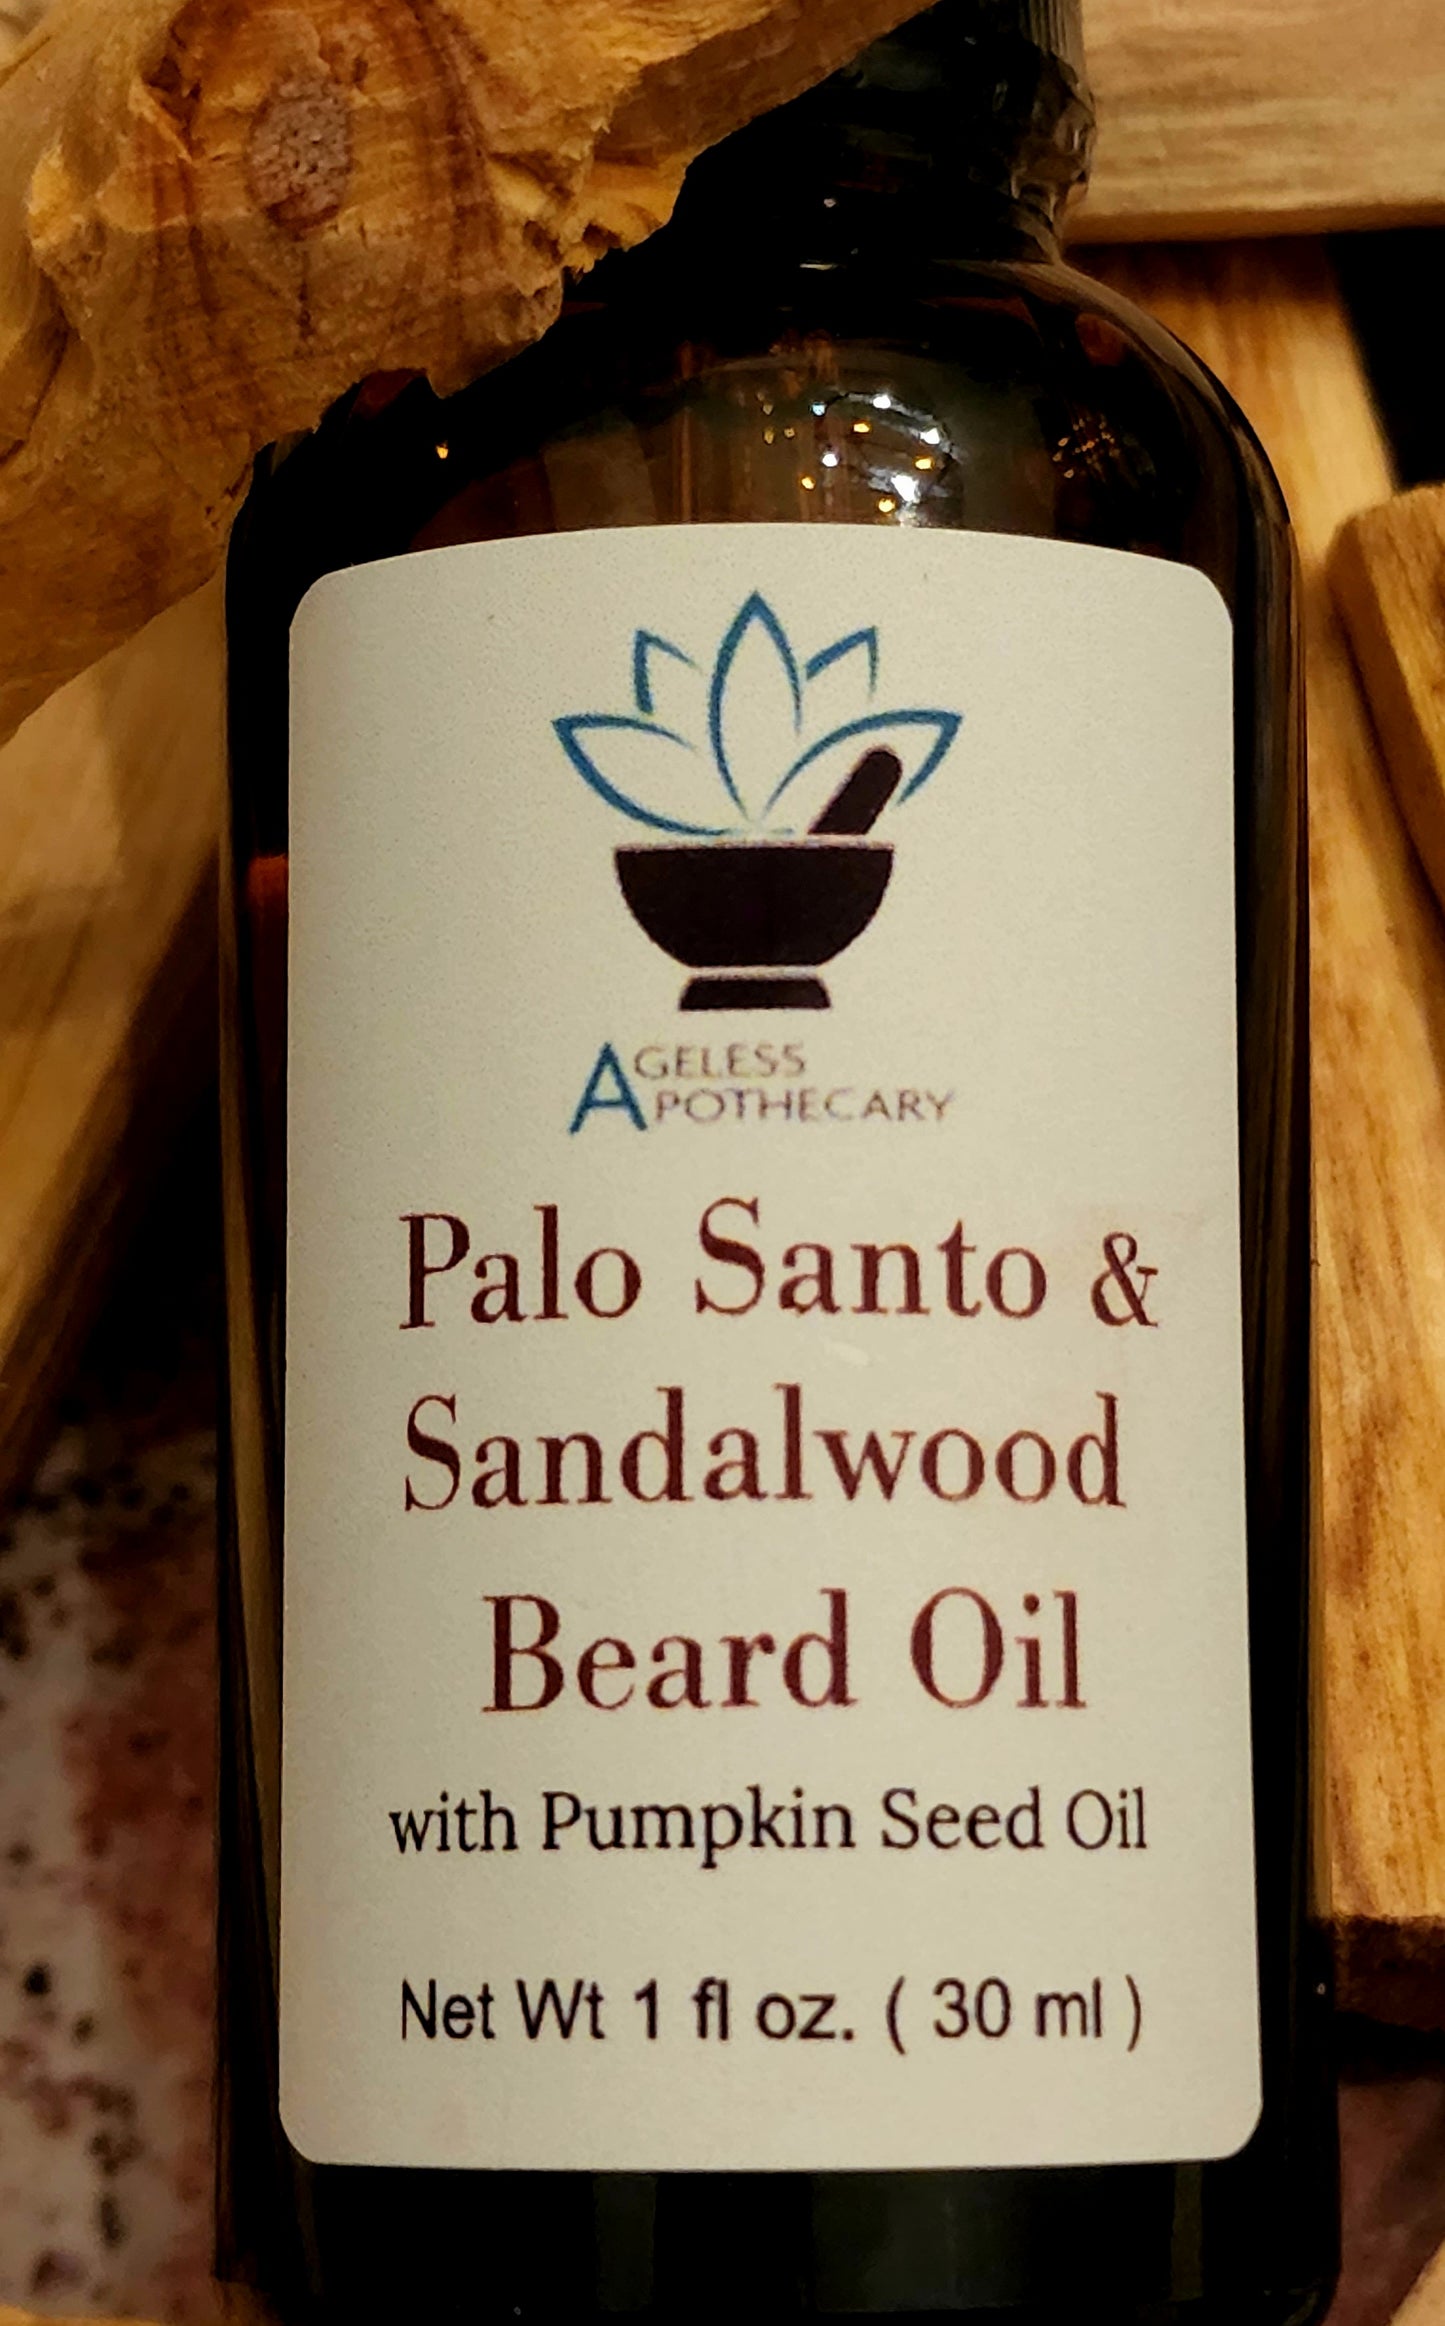 Palo Santo & Sandalwood Beard Oil with Pumpkin Seed Oil